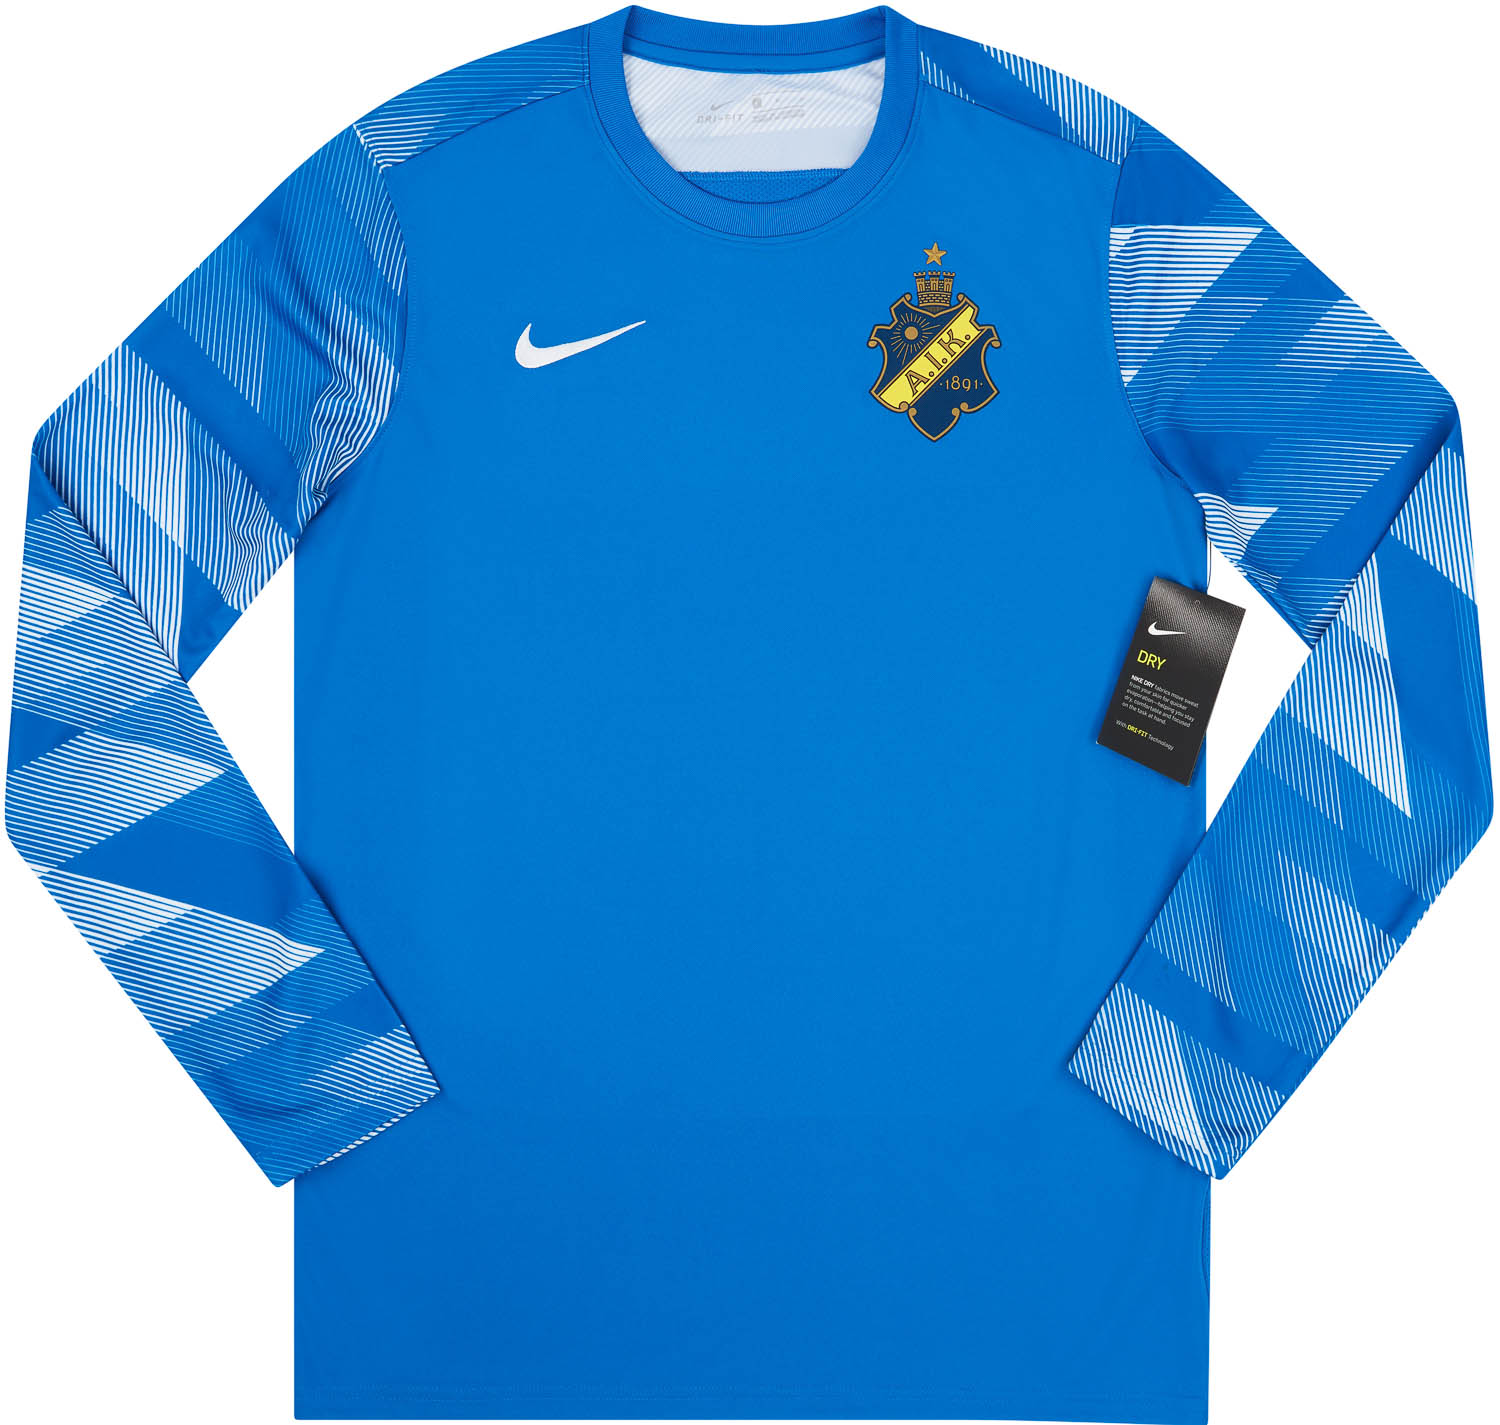 2020 AIK Stockholm Player Issue GK Shirt